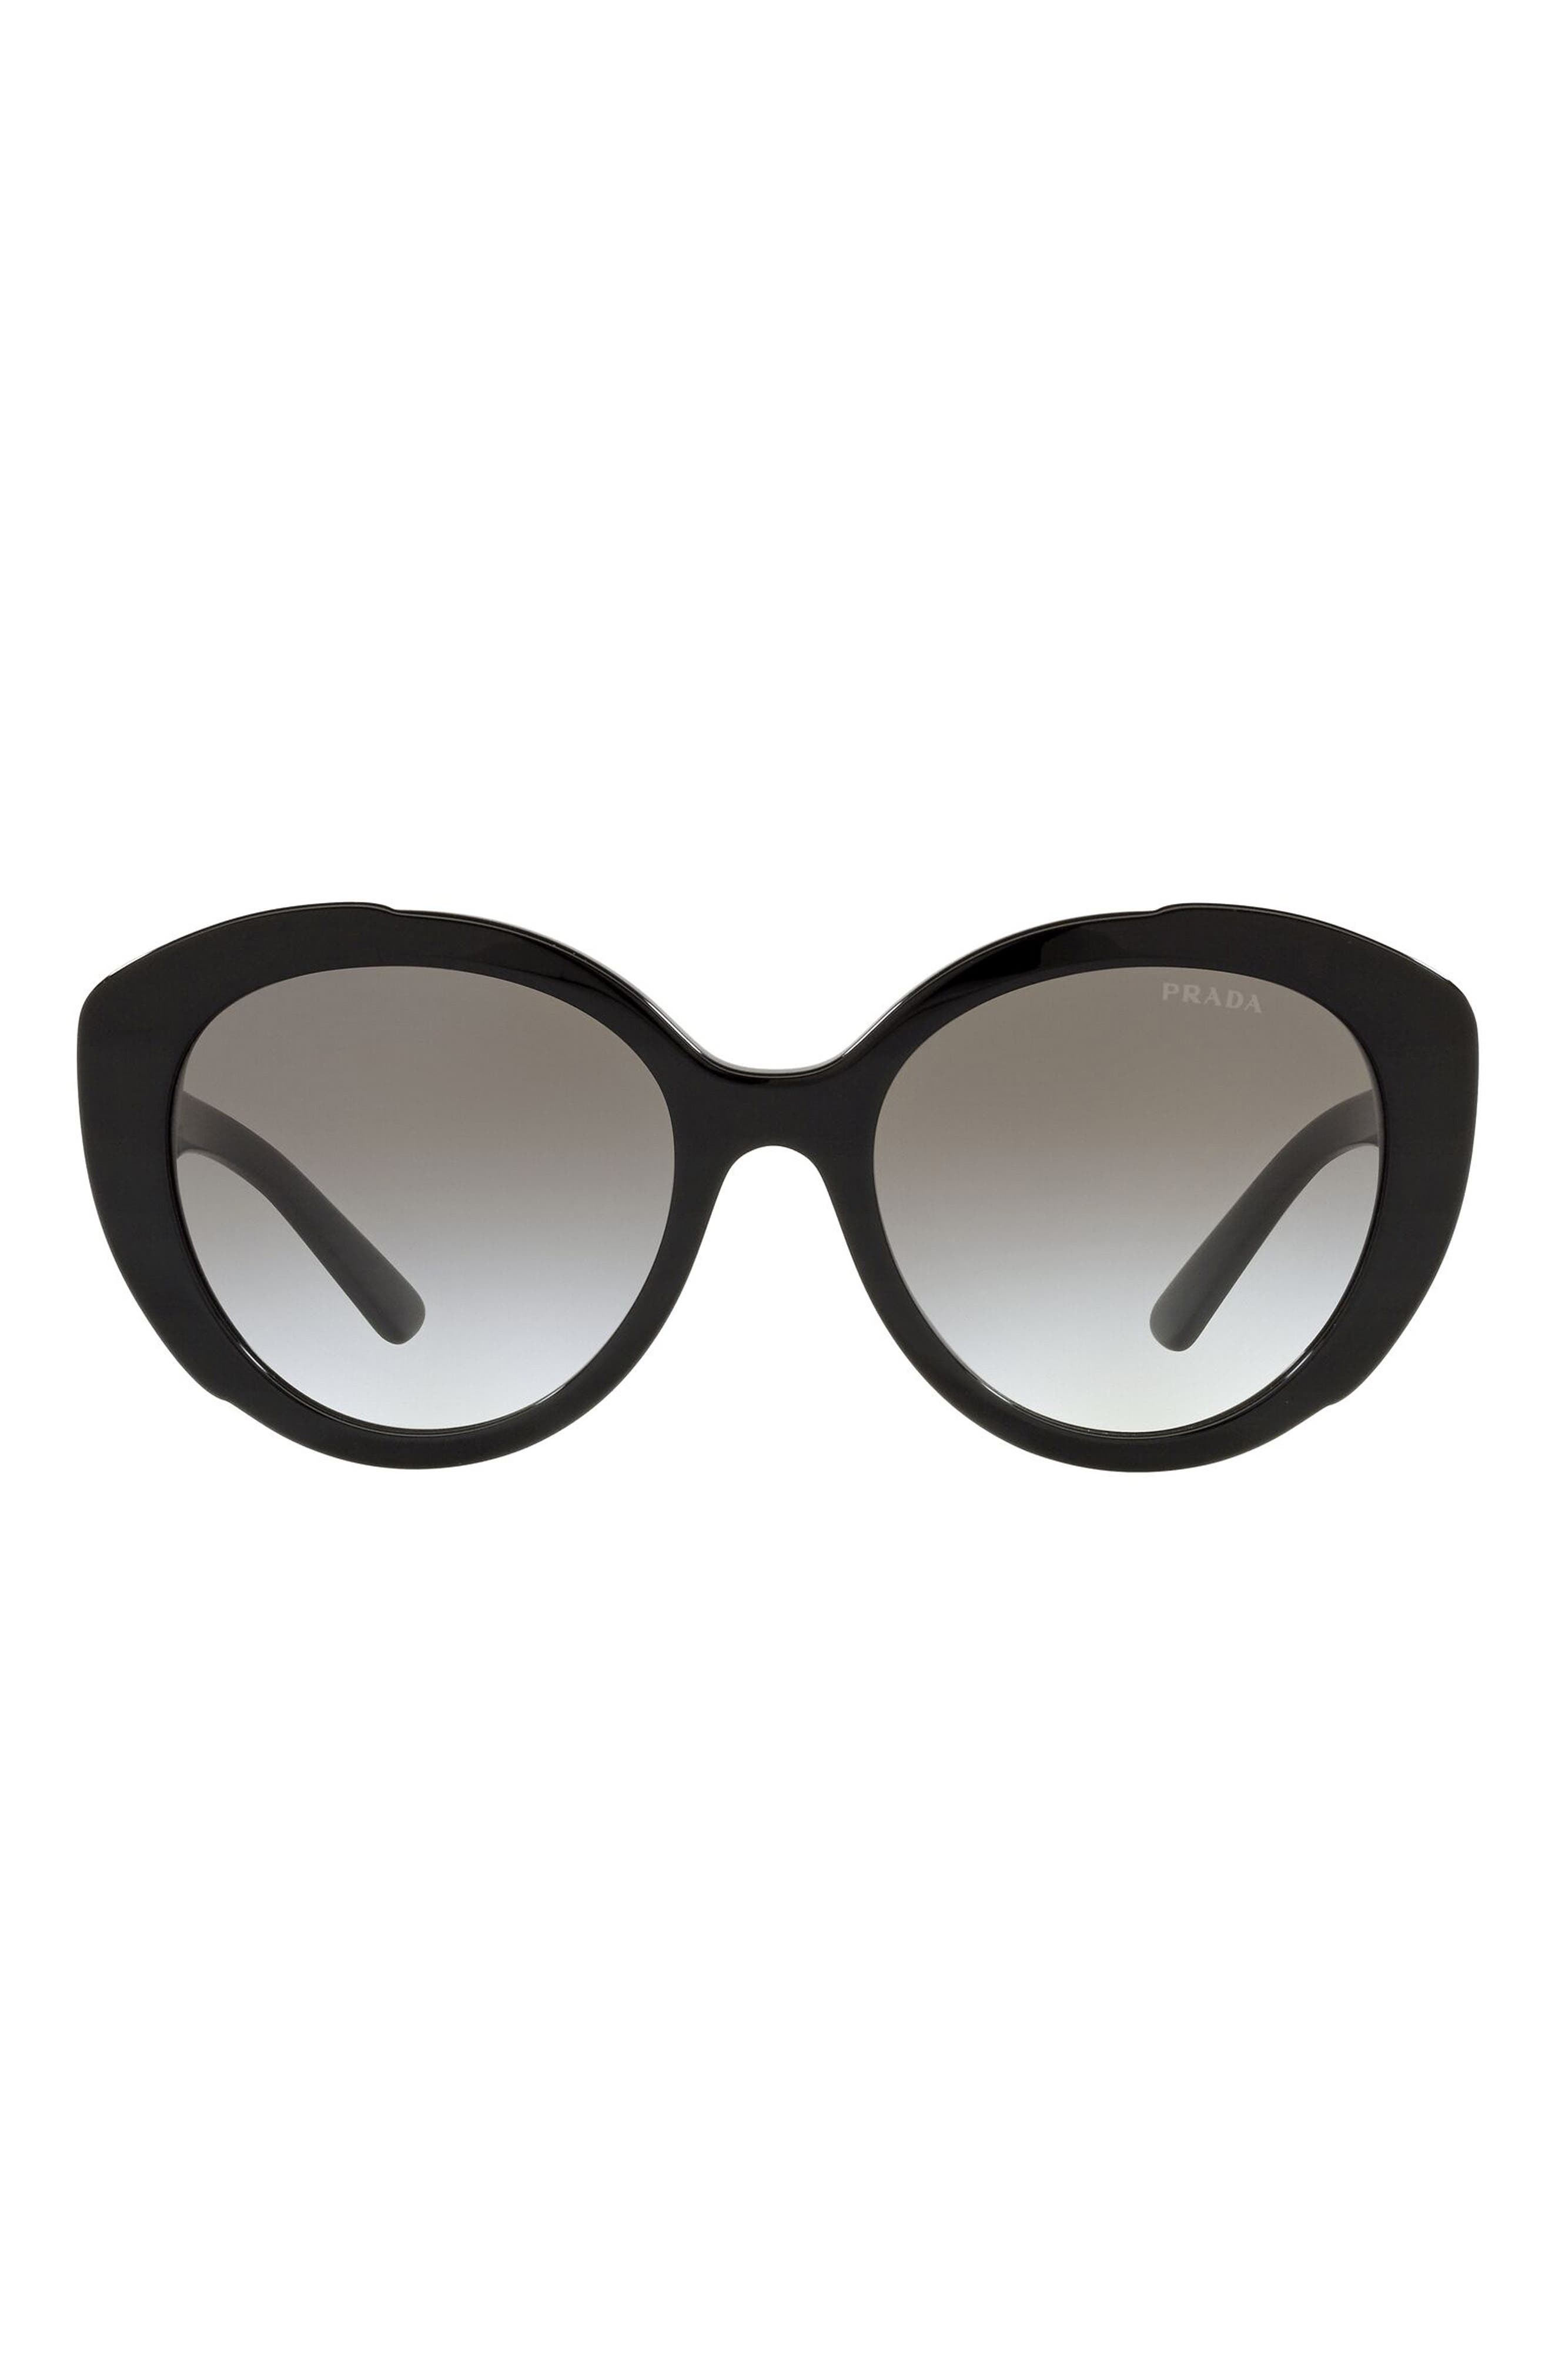 Prada 56mm Cat Eye Sunglasses in Black/Grey Gradient at Nordstrom